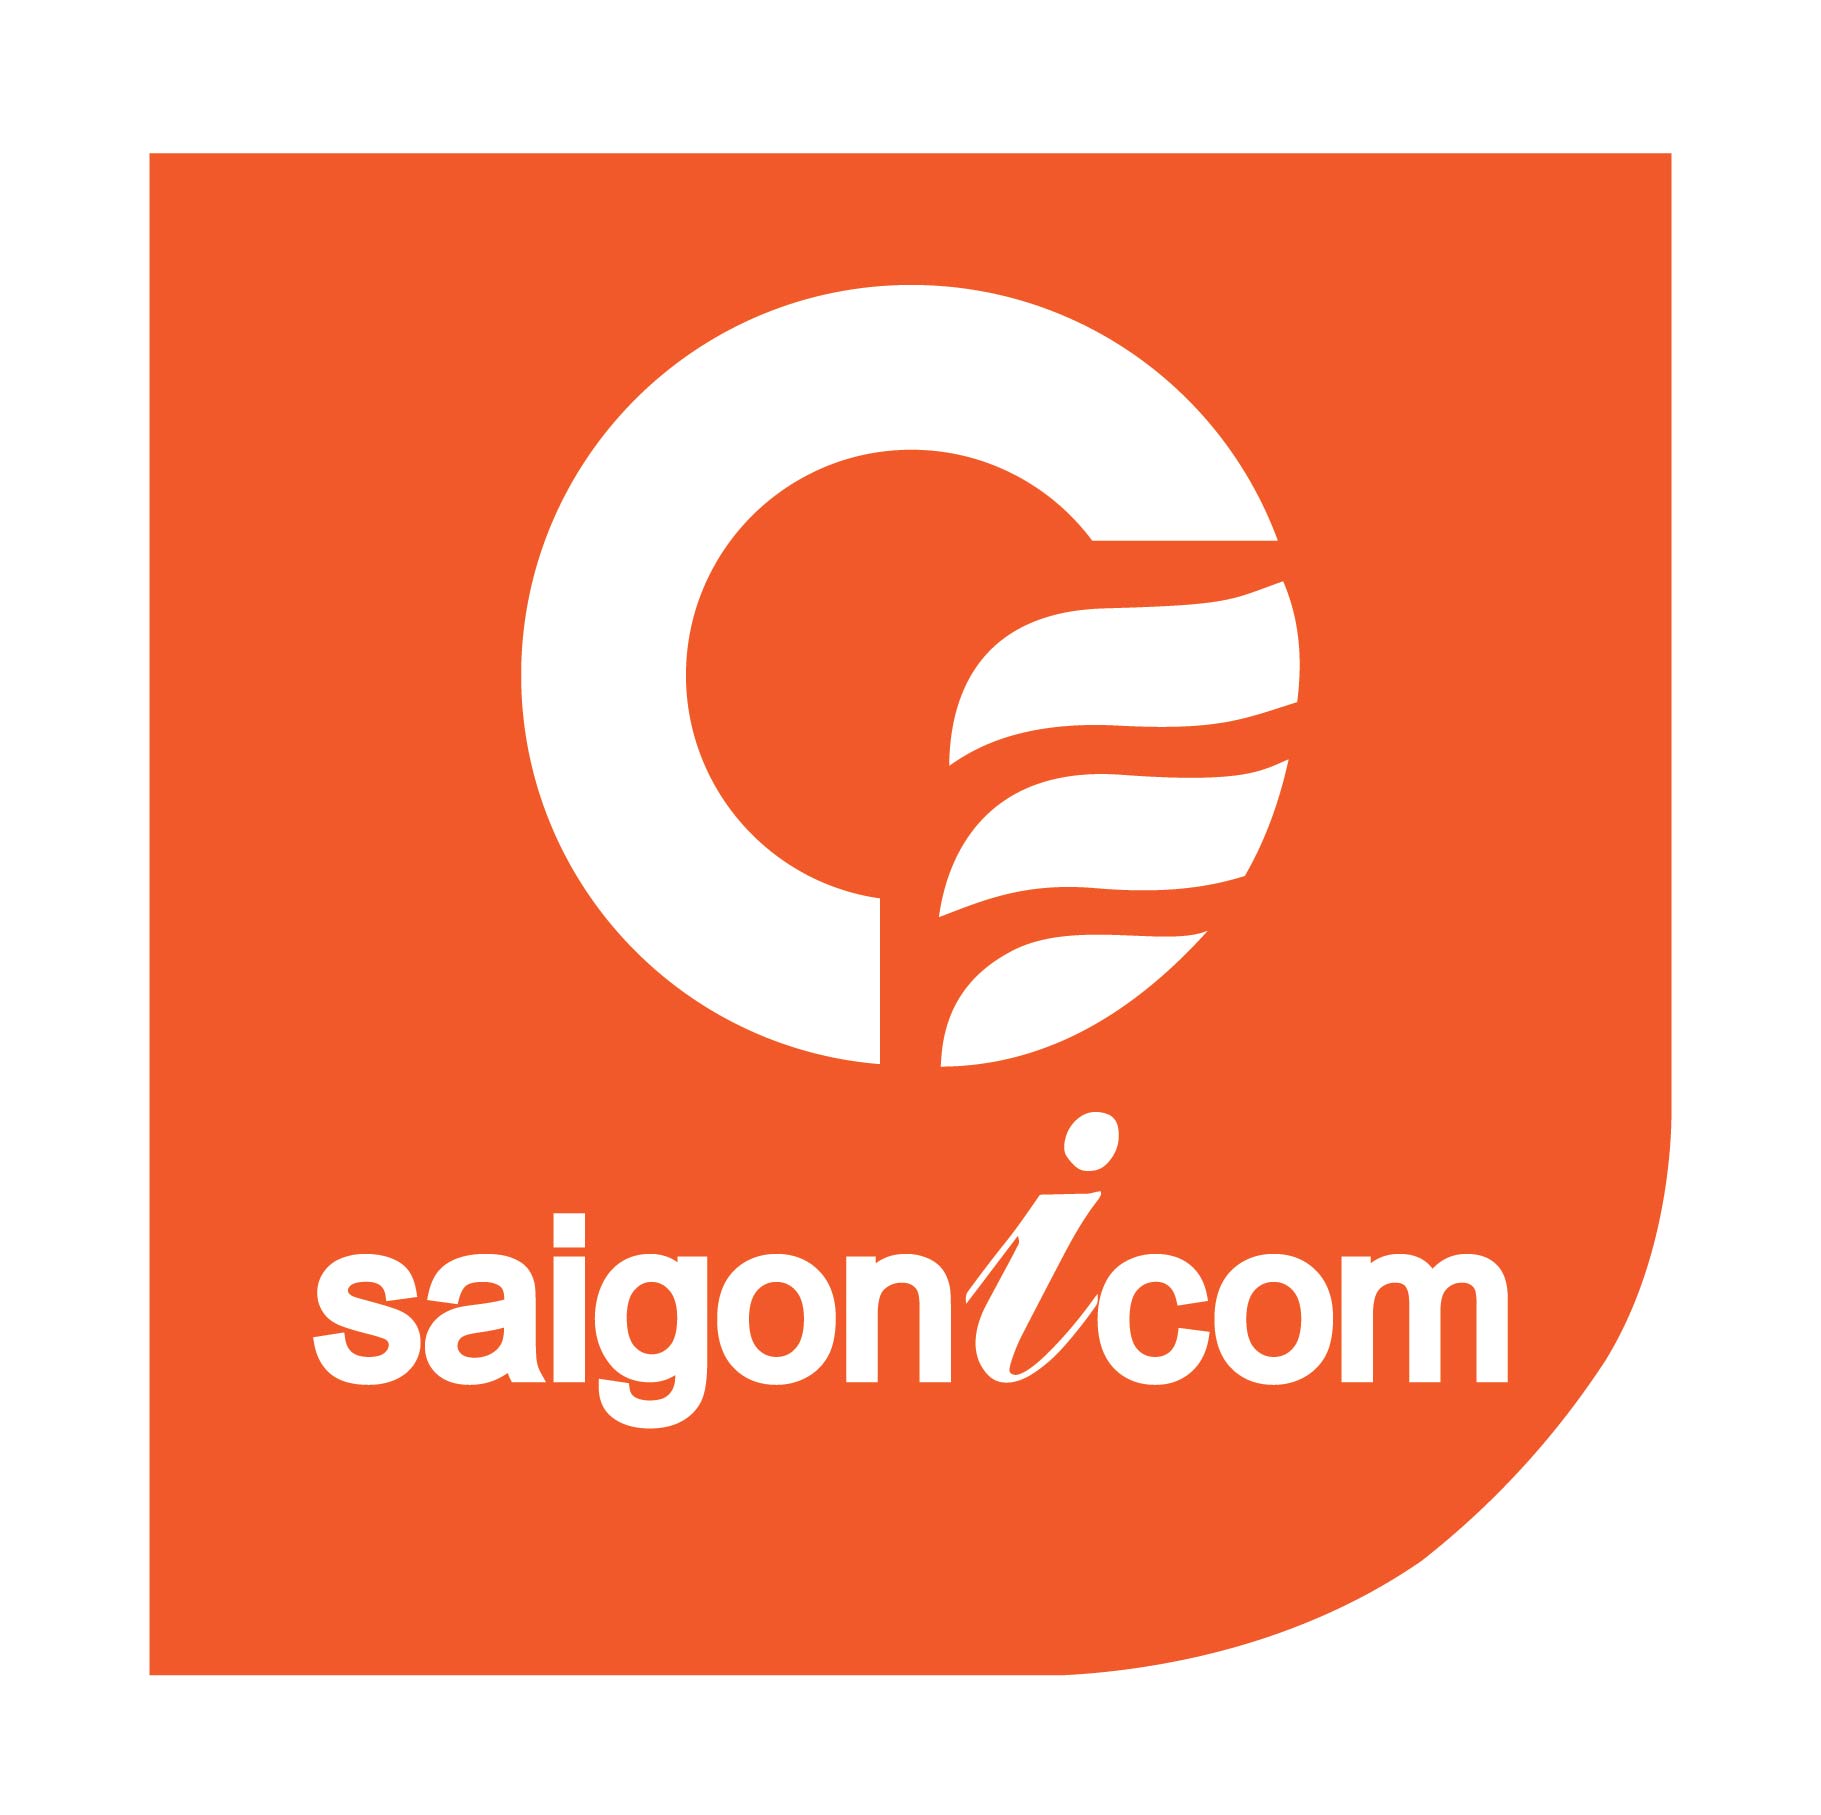 1 SGIC_Logo-01 - Copy (2).